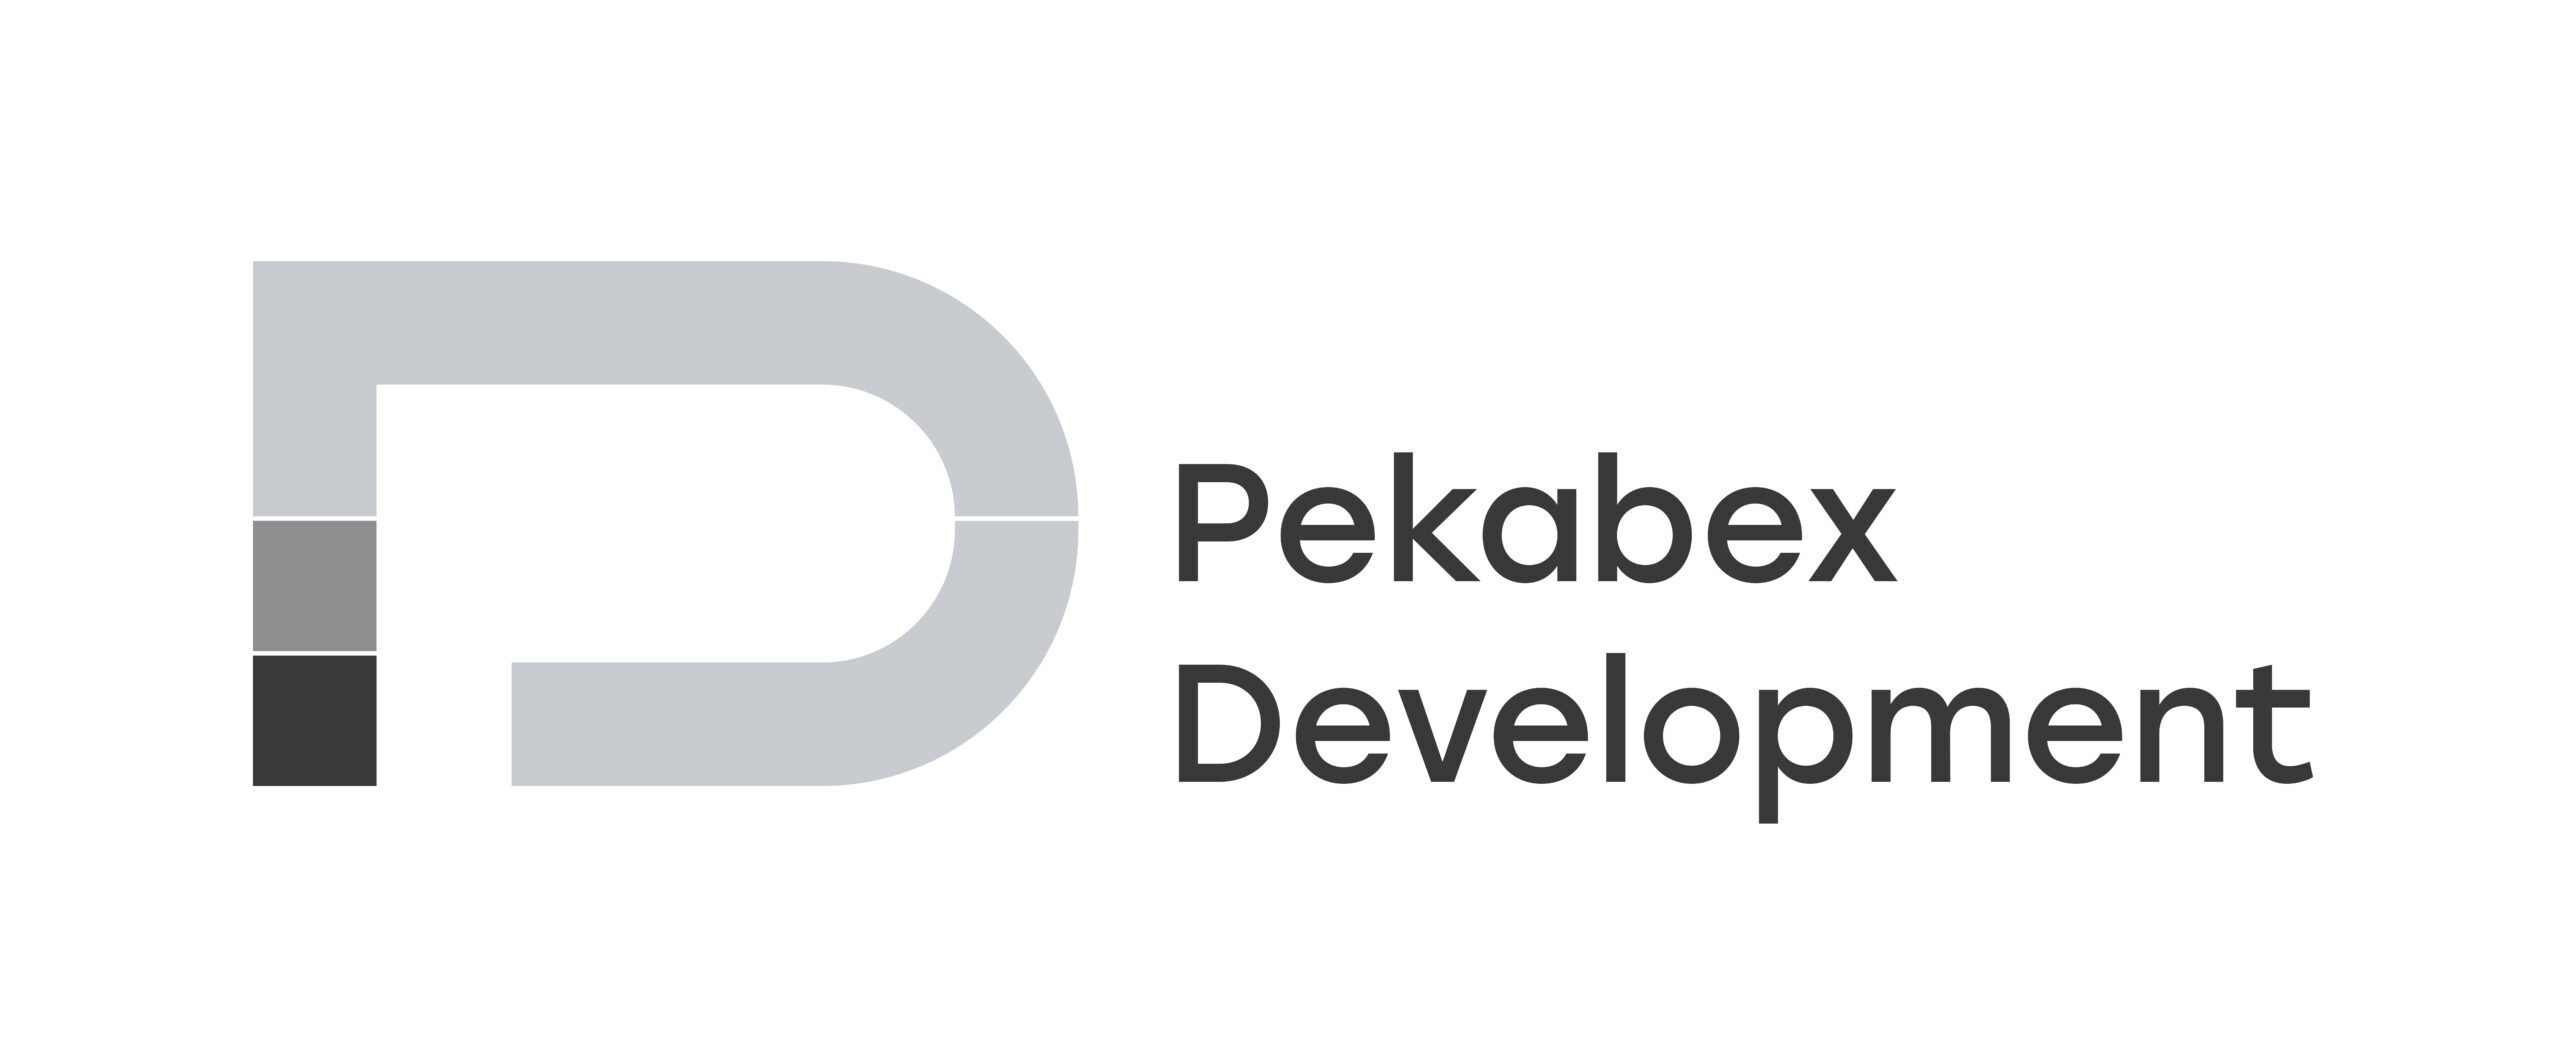 Pekabex Development